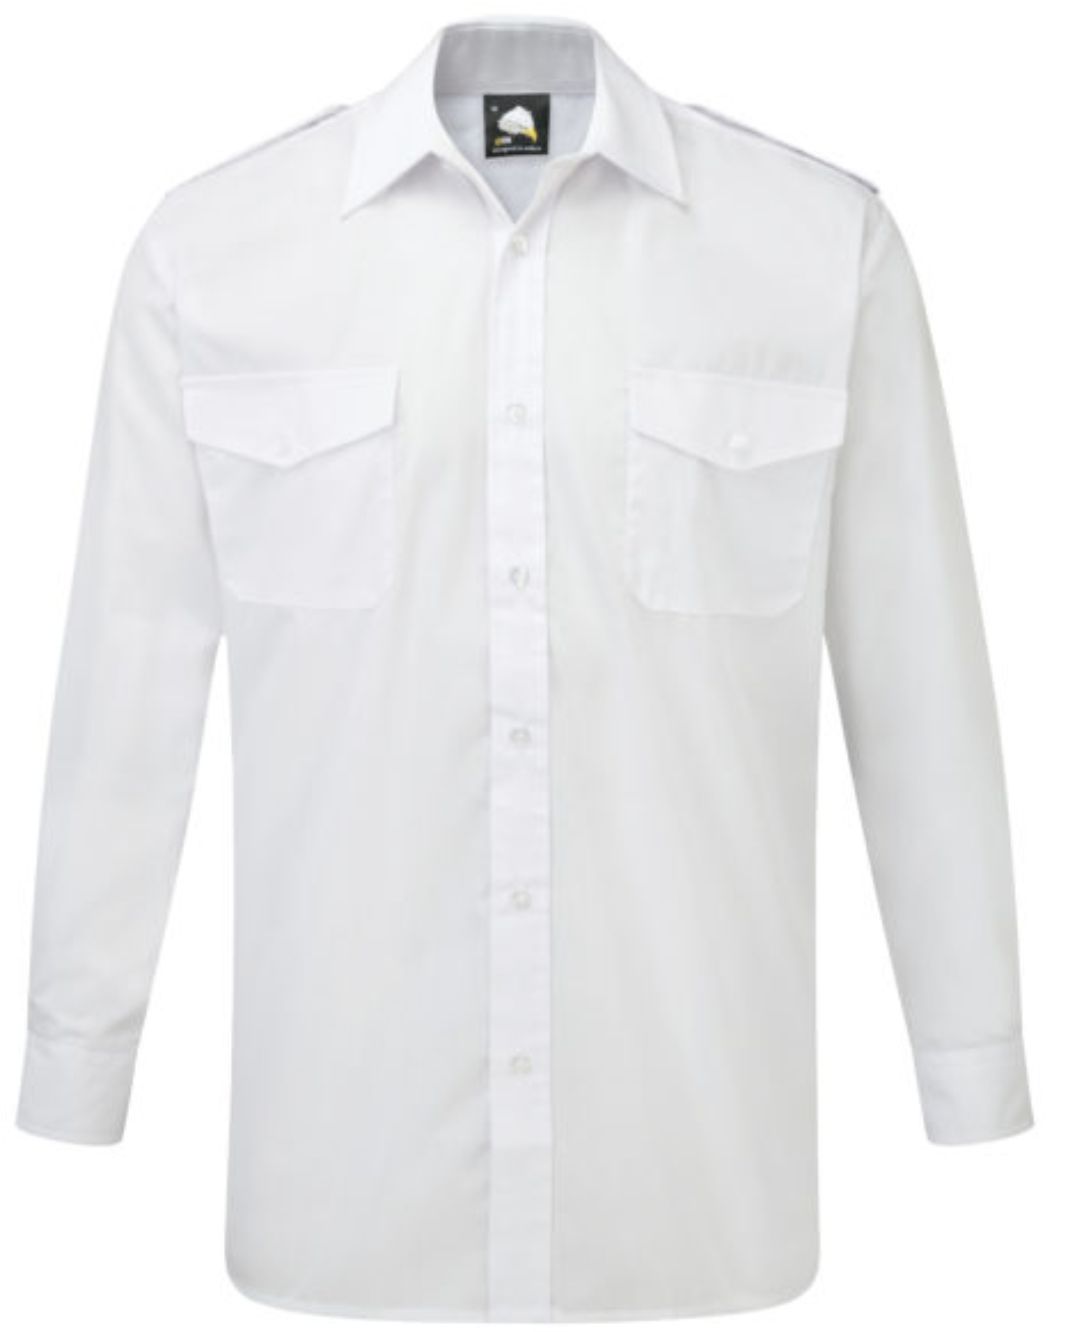 Orn 5710 long sleeve Premium Pilot Shirt